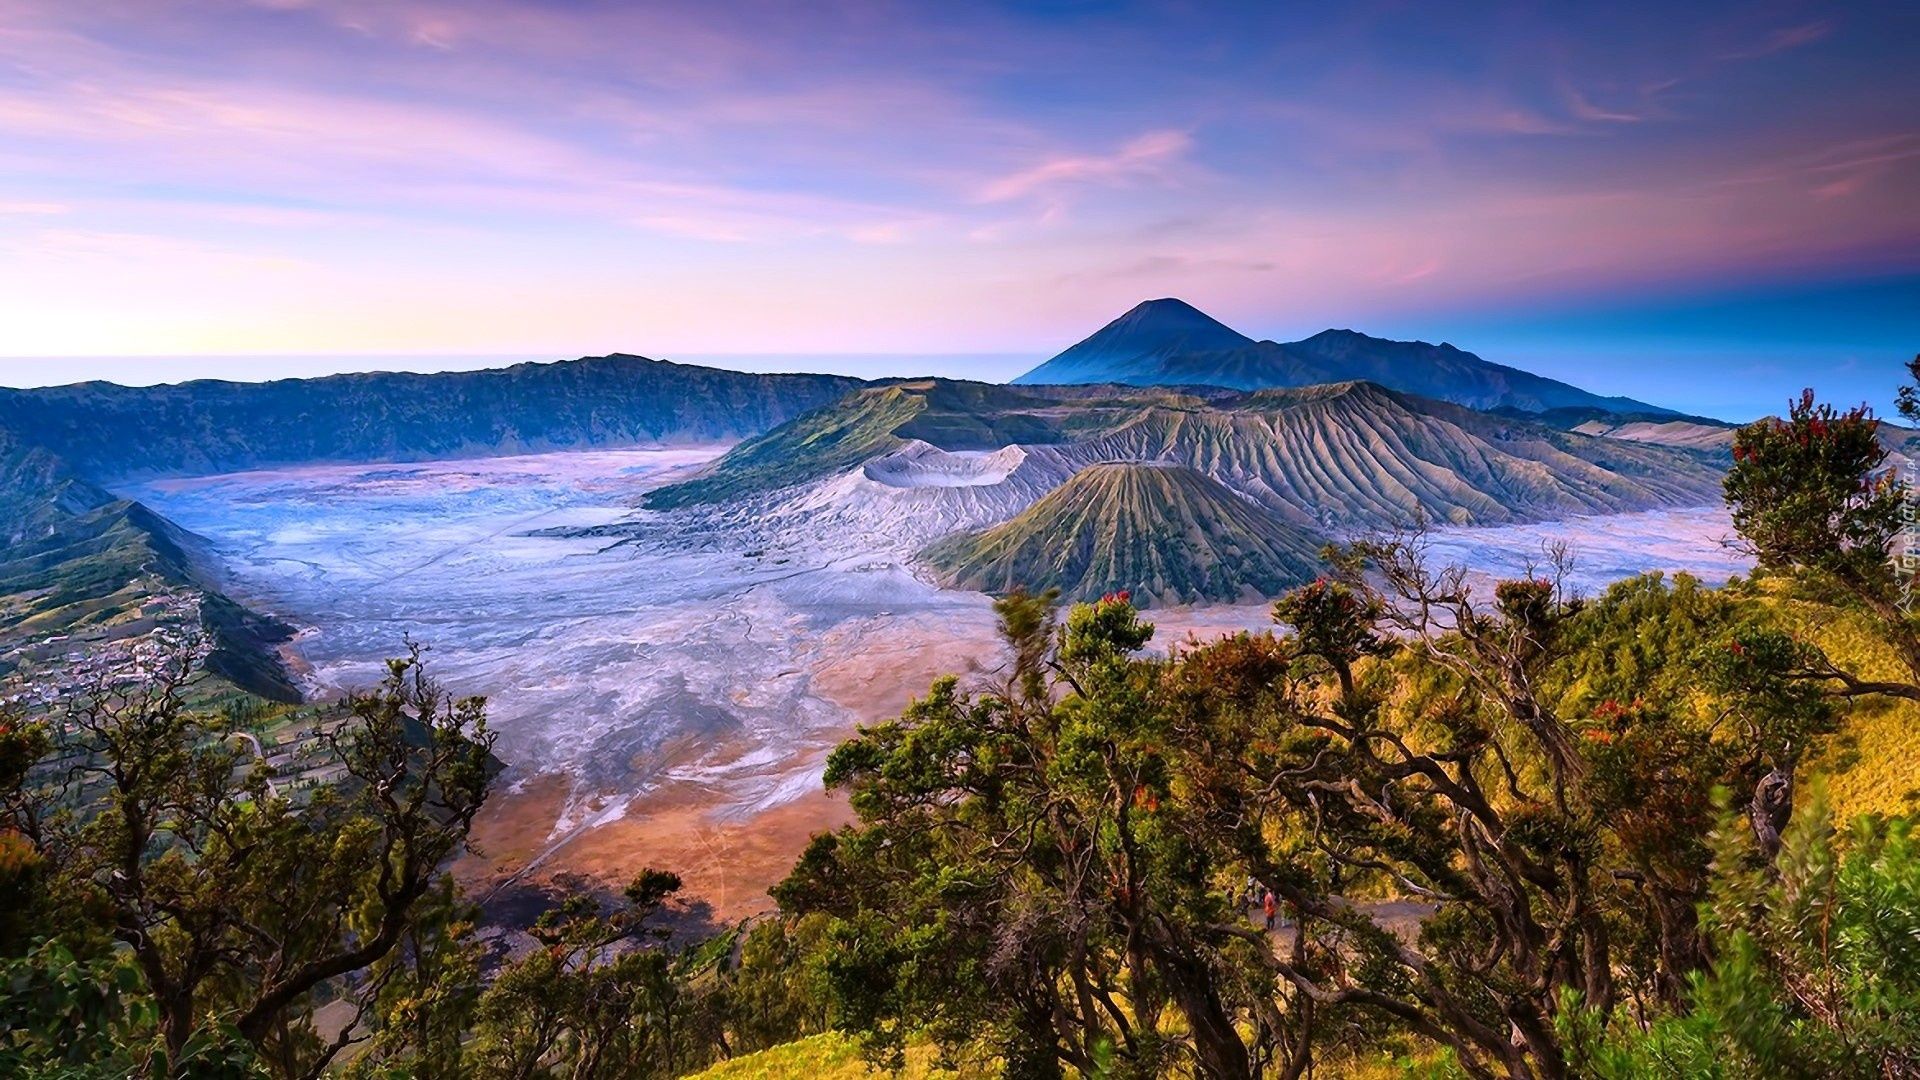 The Volcano Bromo In Indonesia